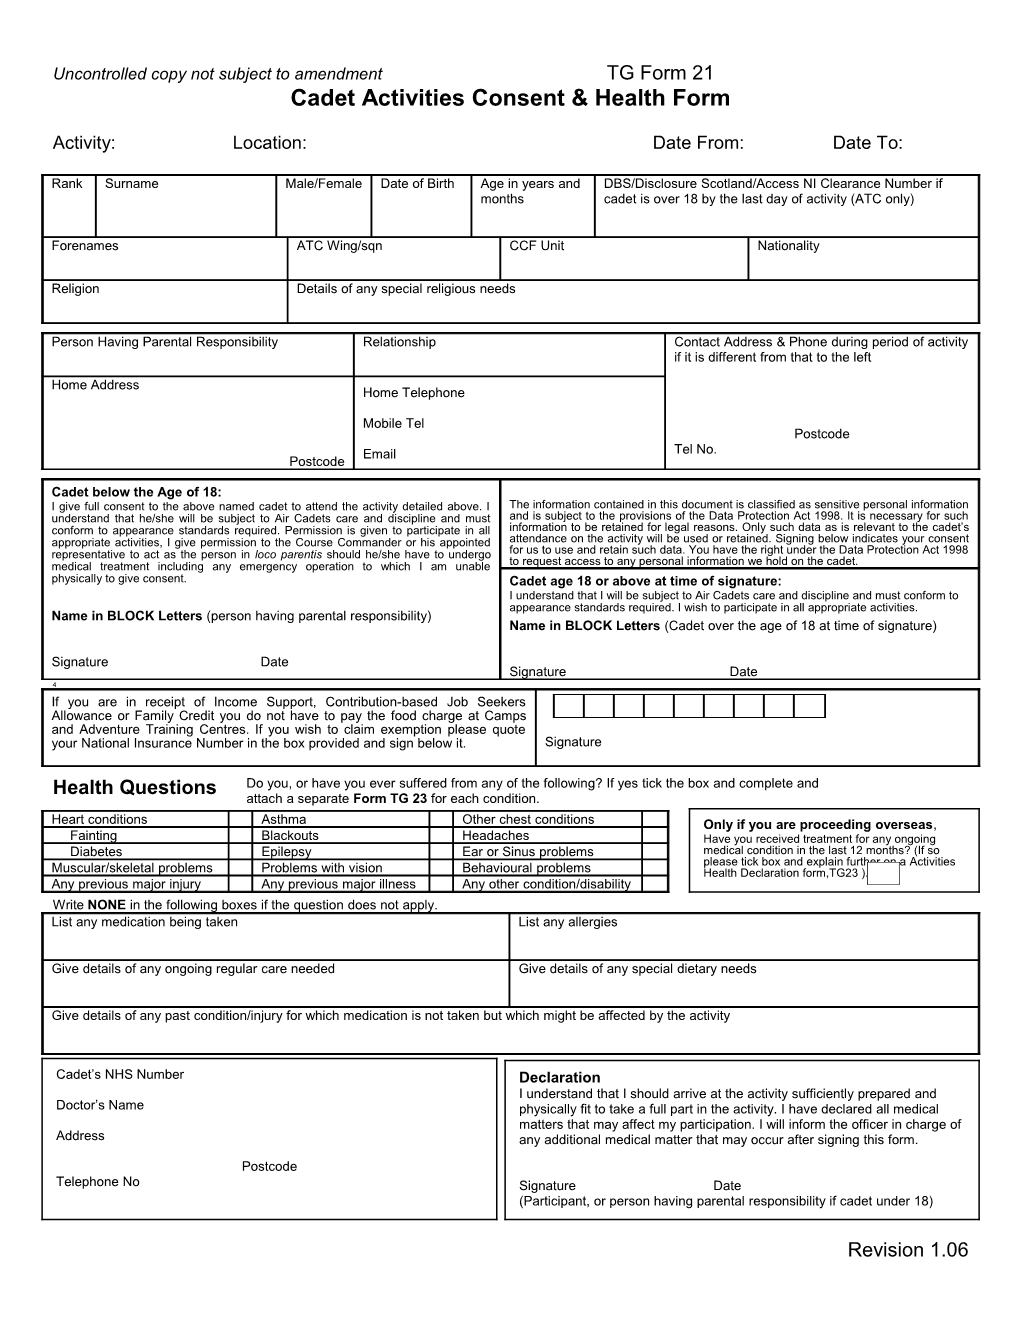 Cadet Activities Consent & Health Form TG21